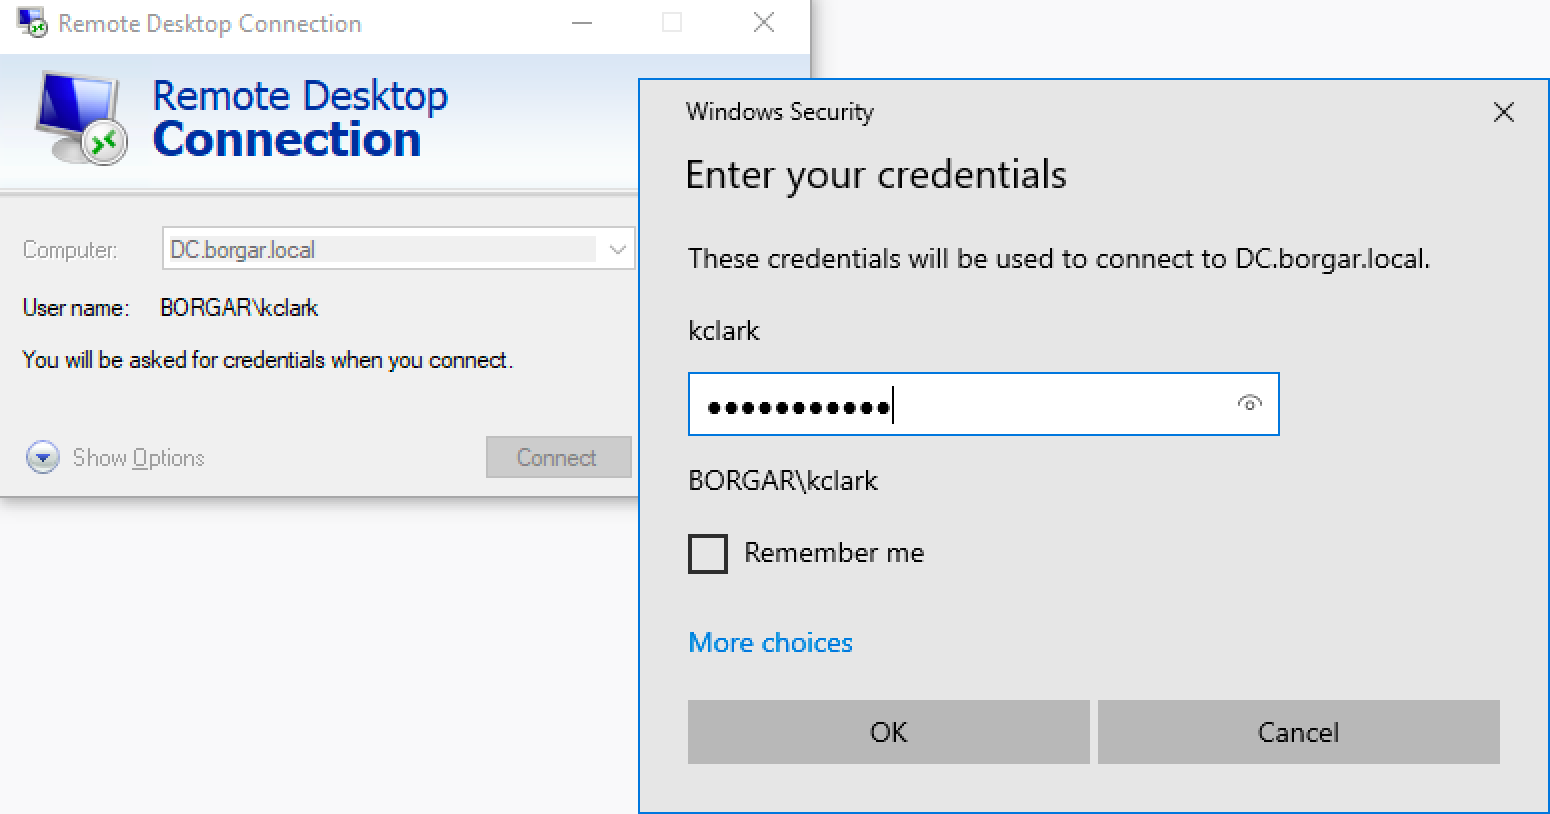 Using kclark's valid username and password to log into the DC via Remote Desktop